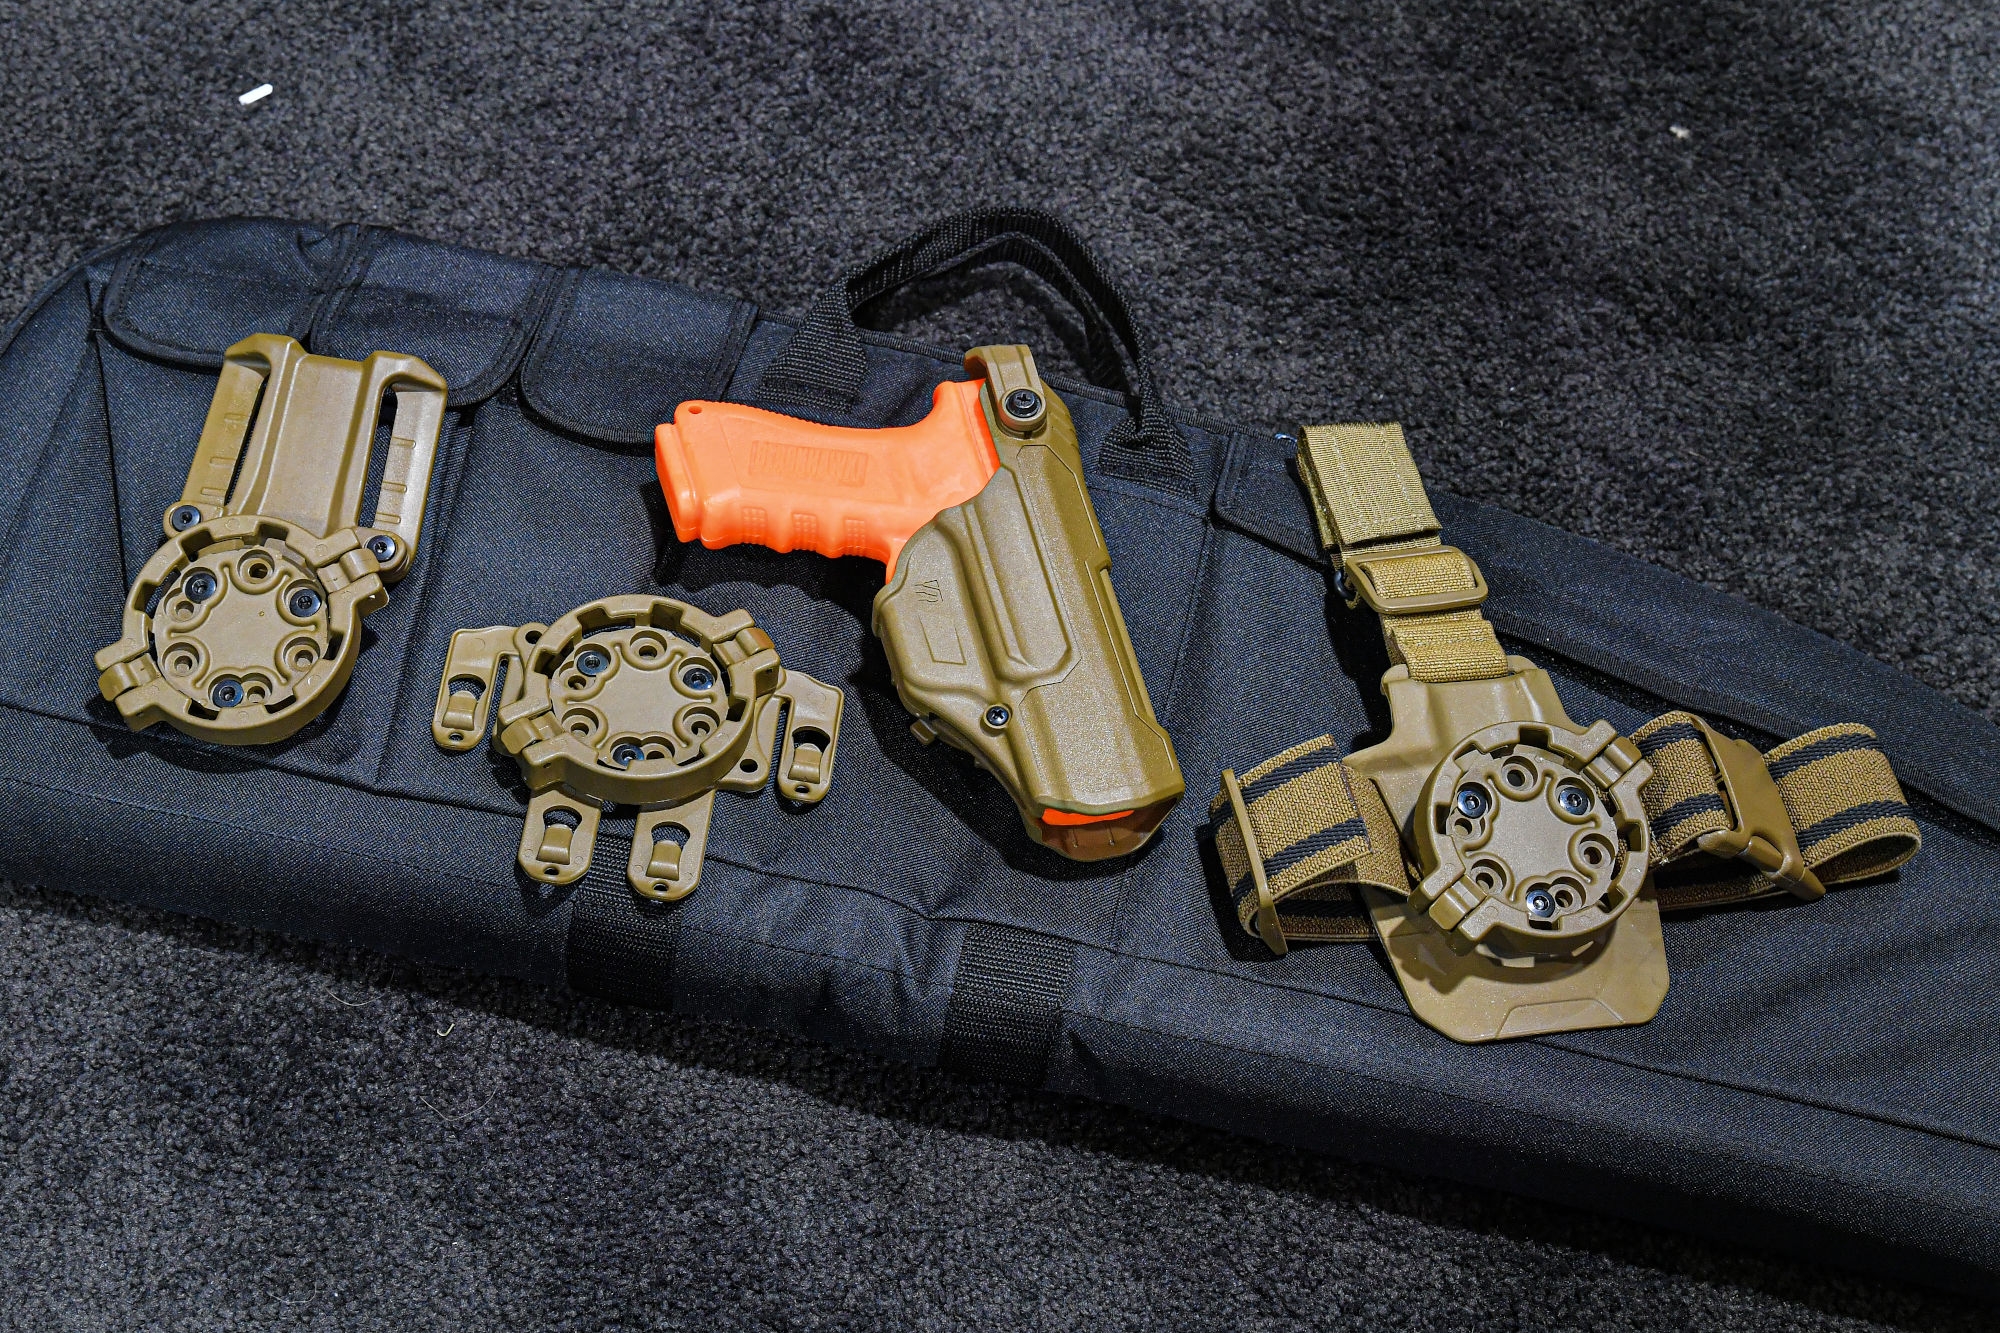 Blackhawk holster for French Army GLOCK pistols